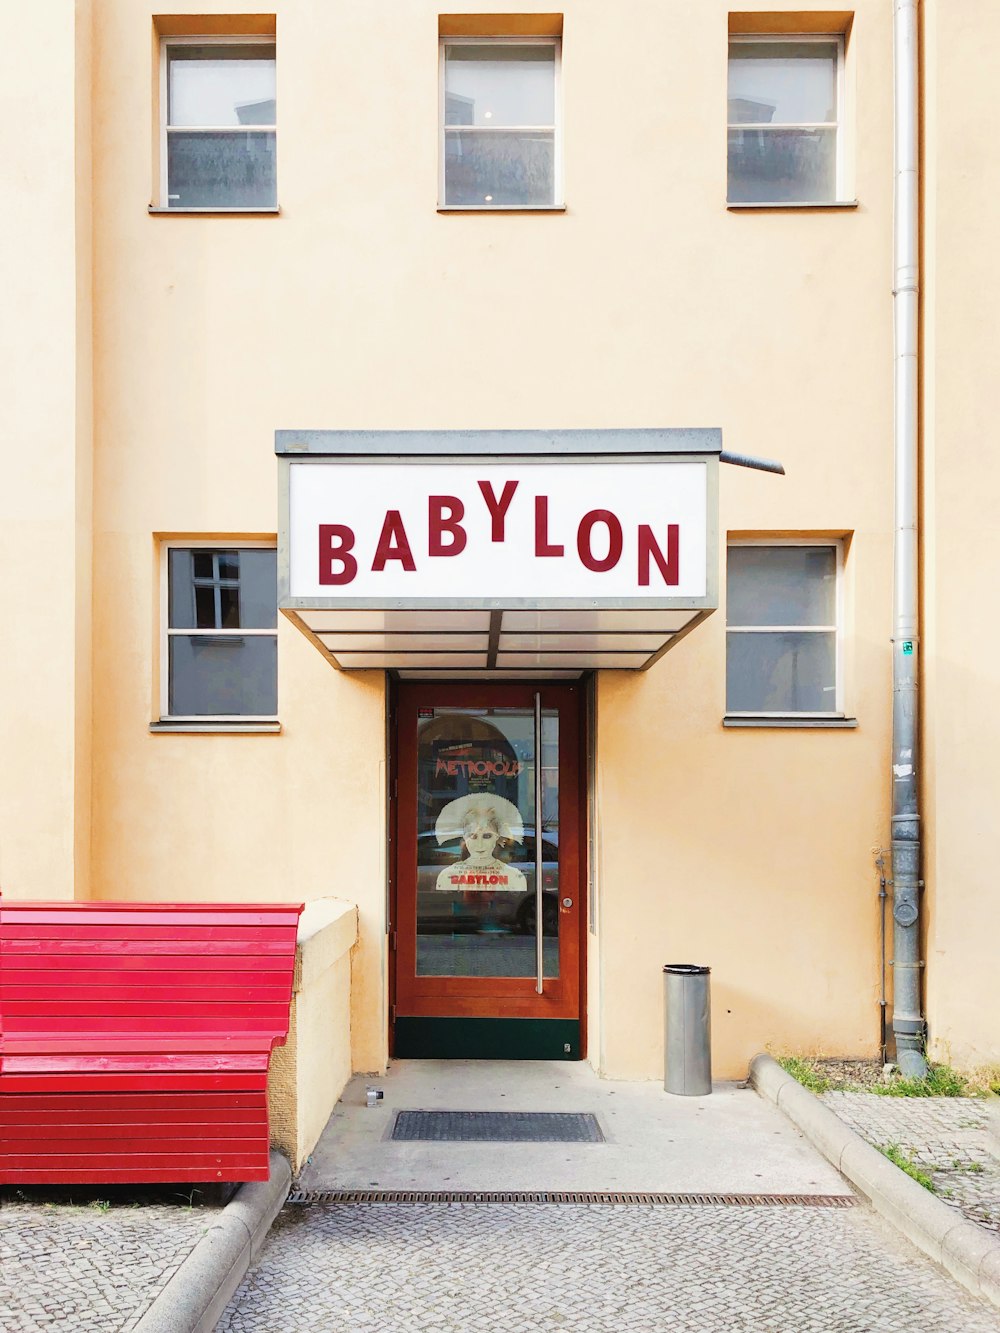 Babylon building